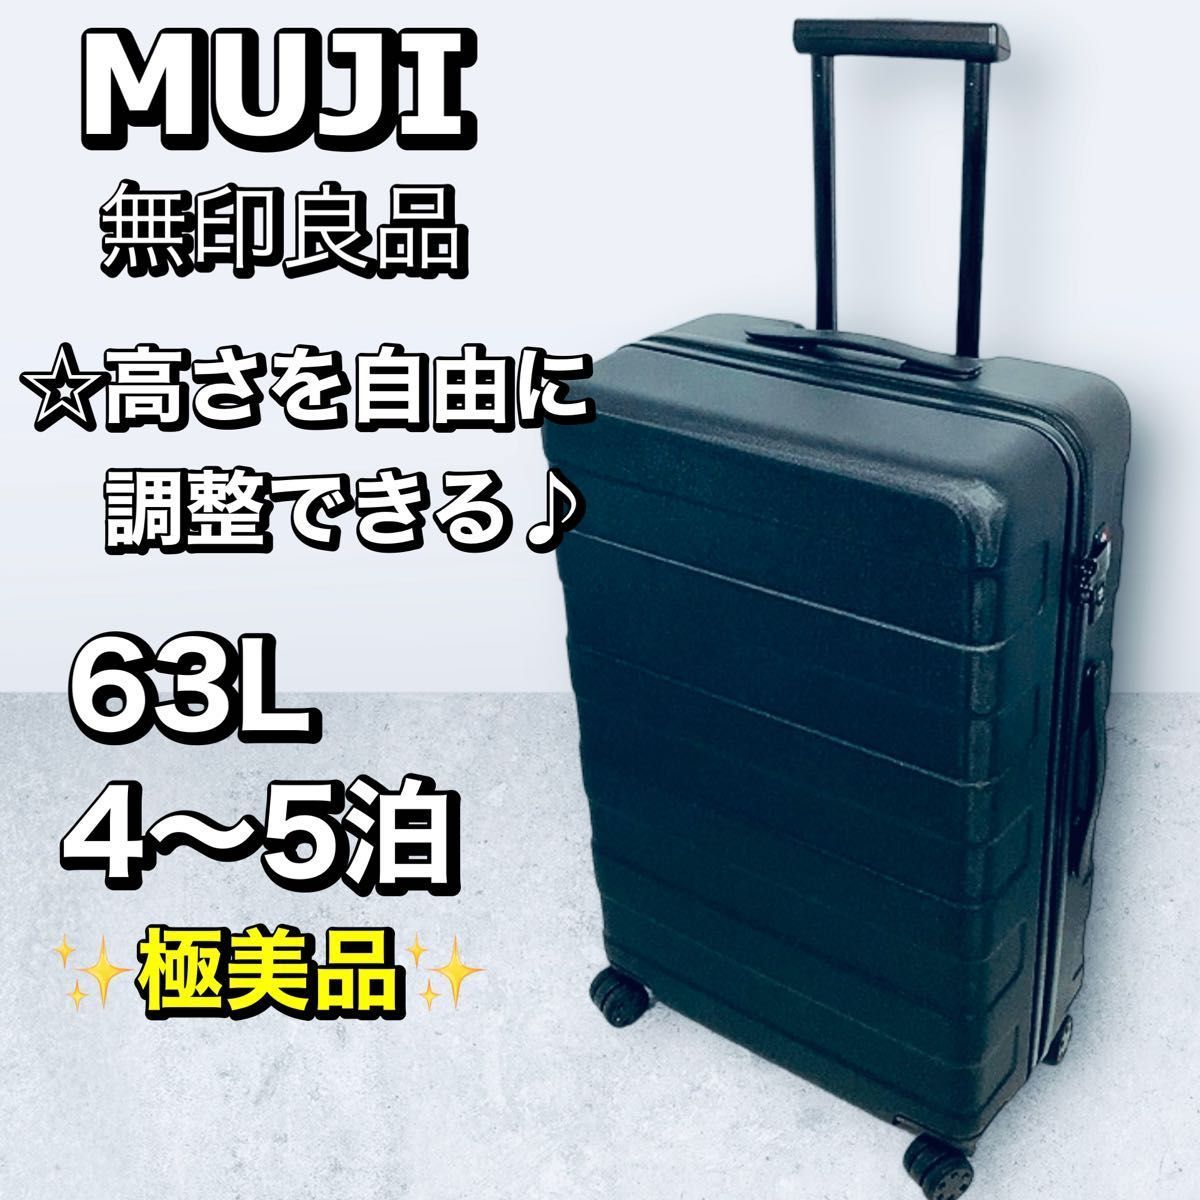 MUJI 無印良品 キャリーケース スーツケース 63L 4〜5泊 4輪 ブラック ...